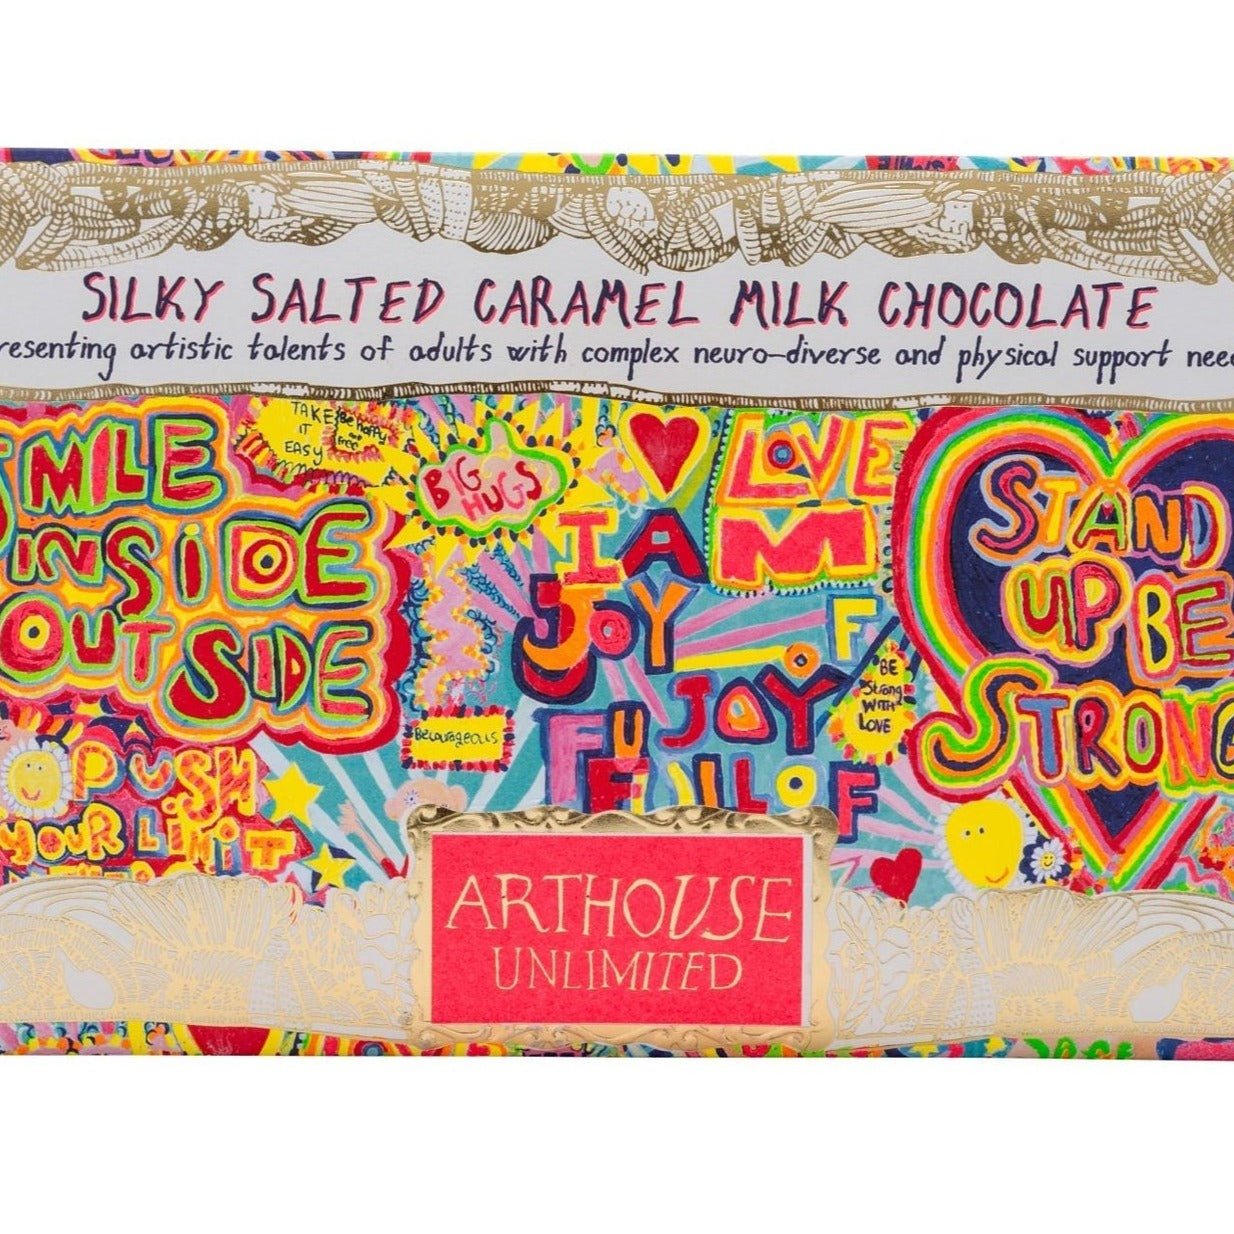 Arthouse Unlimited Chocolate -Silky Salted Caramel Milk Chocolate